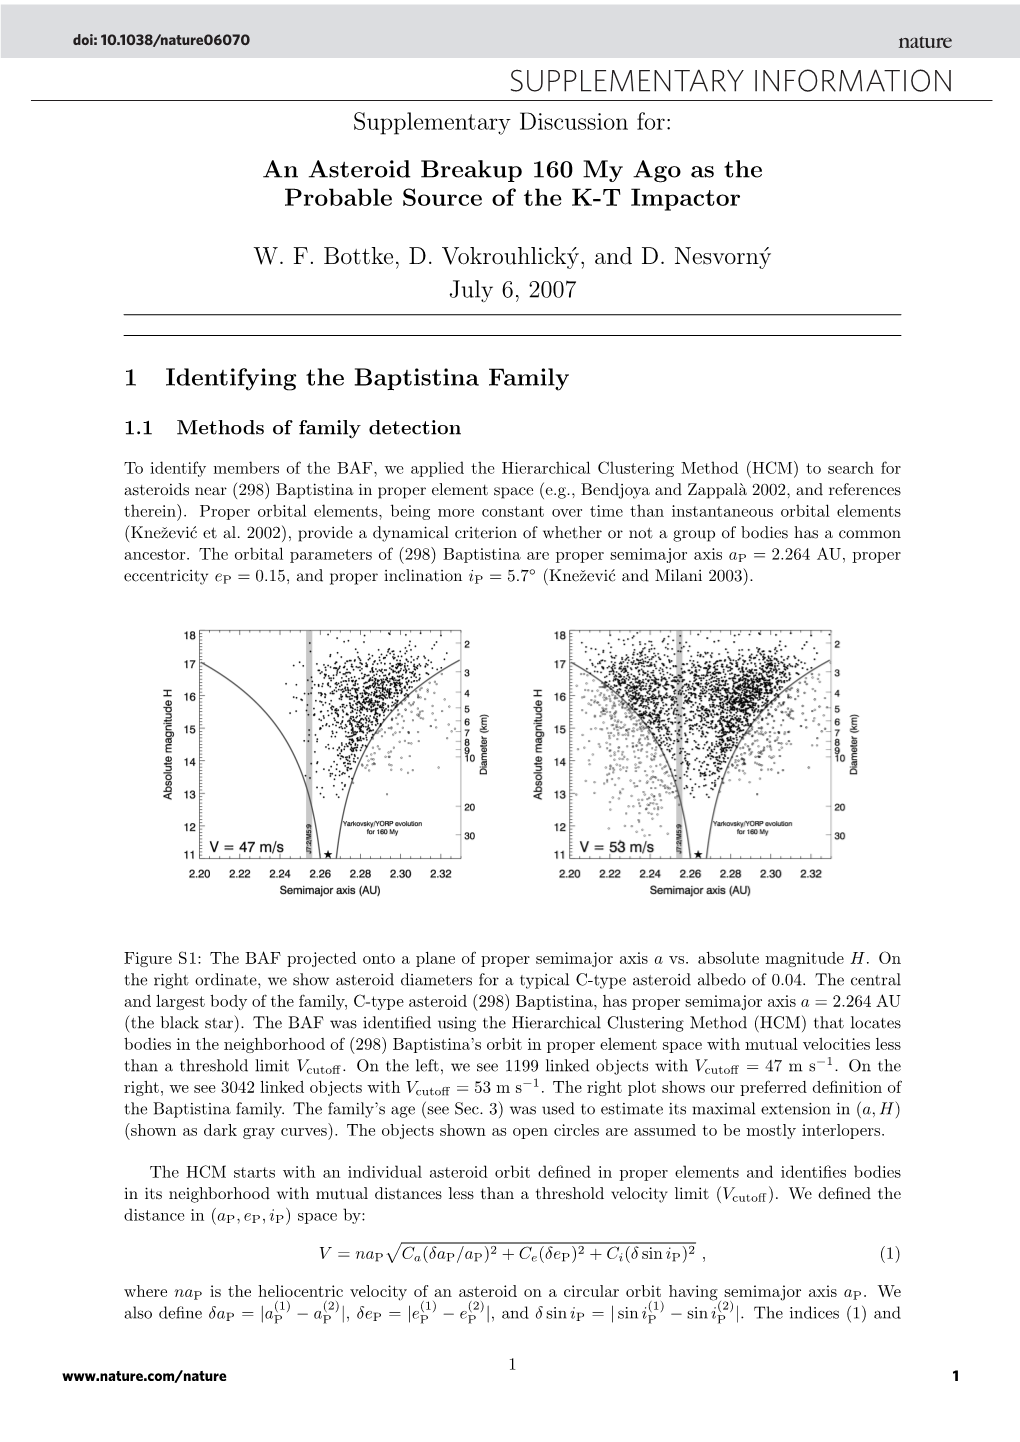 PDF of Supplemental Material